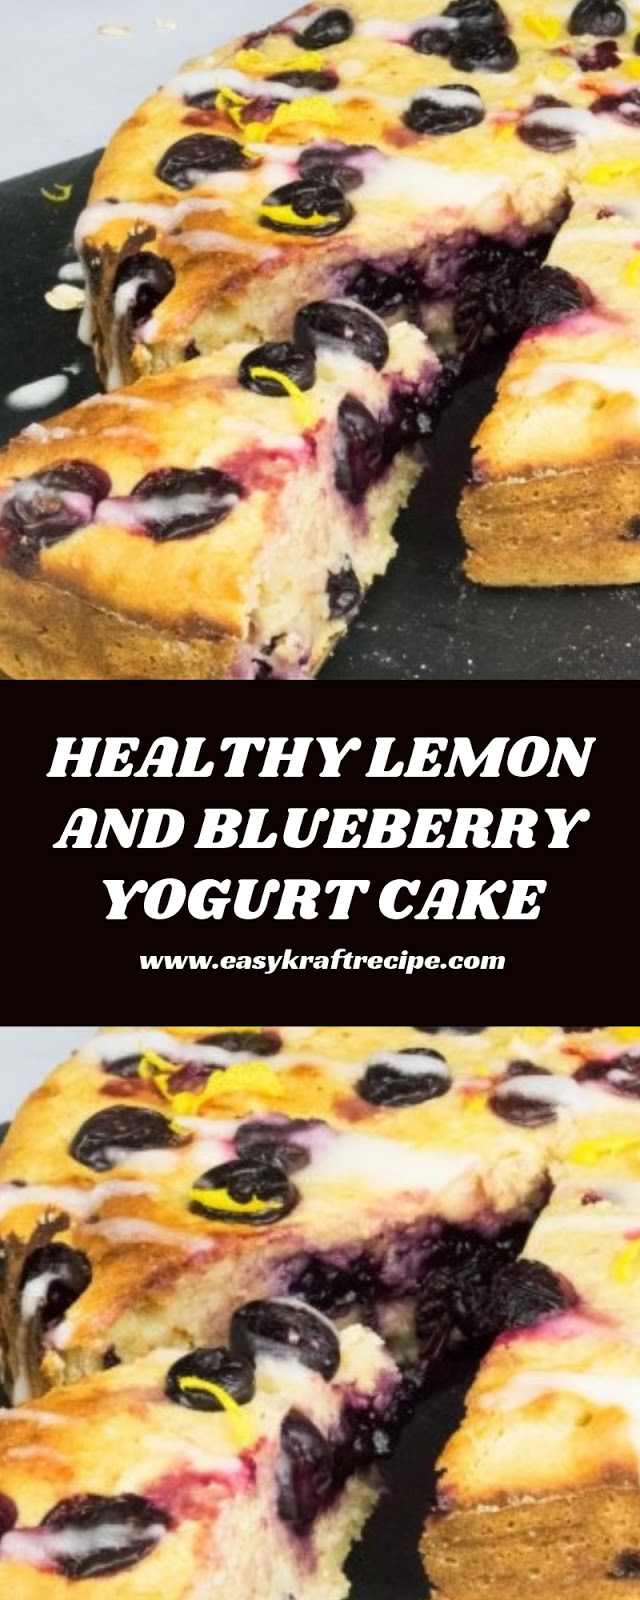 HEALTHY LEMON AND BLUEBERRY YOGURT CAKE